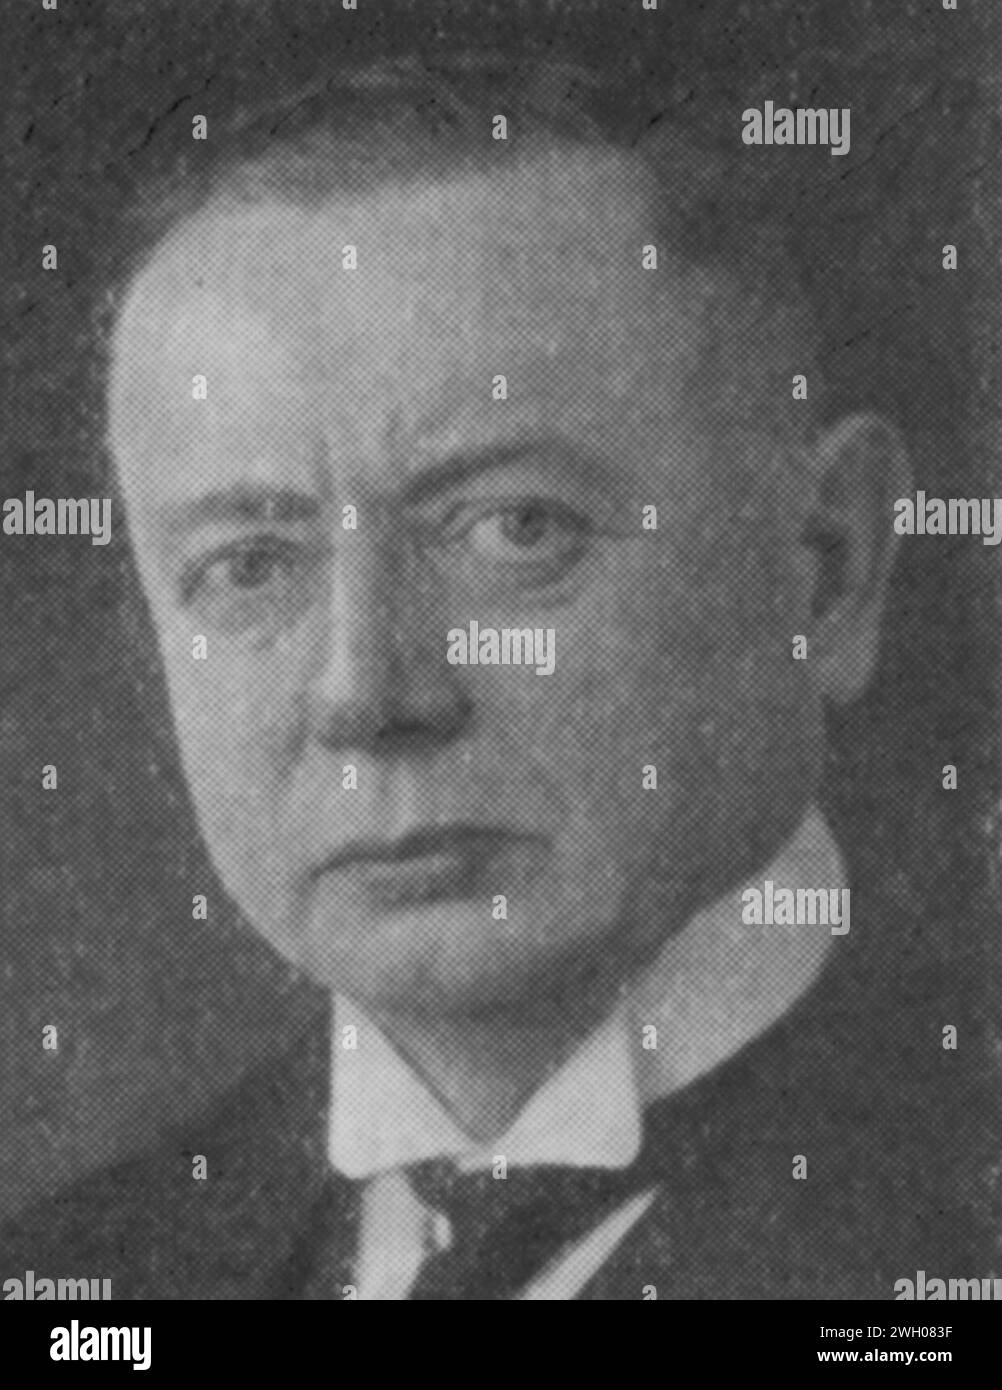 Bardtke-paul-in-trommsdorff-paul-der-lehrkoerper-der-TH-hannover-1831-1931-hannover-1931-s050. Stock Photo